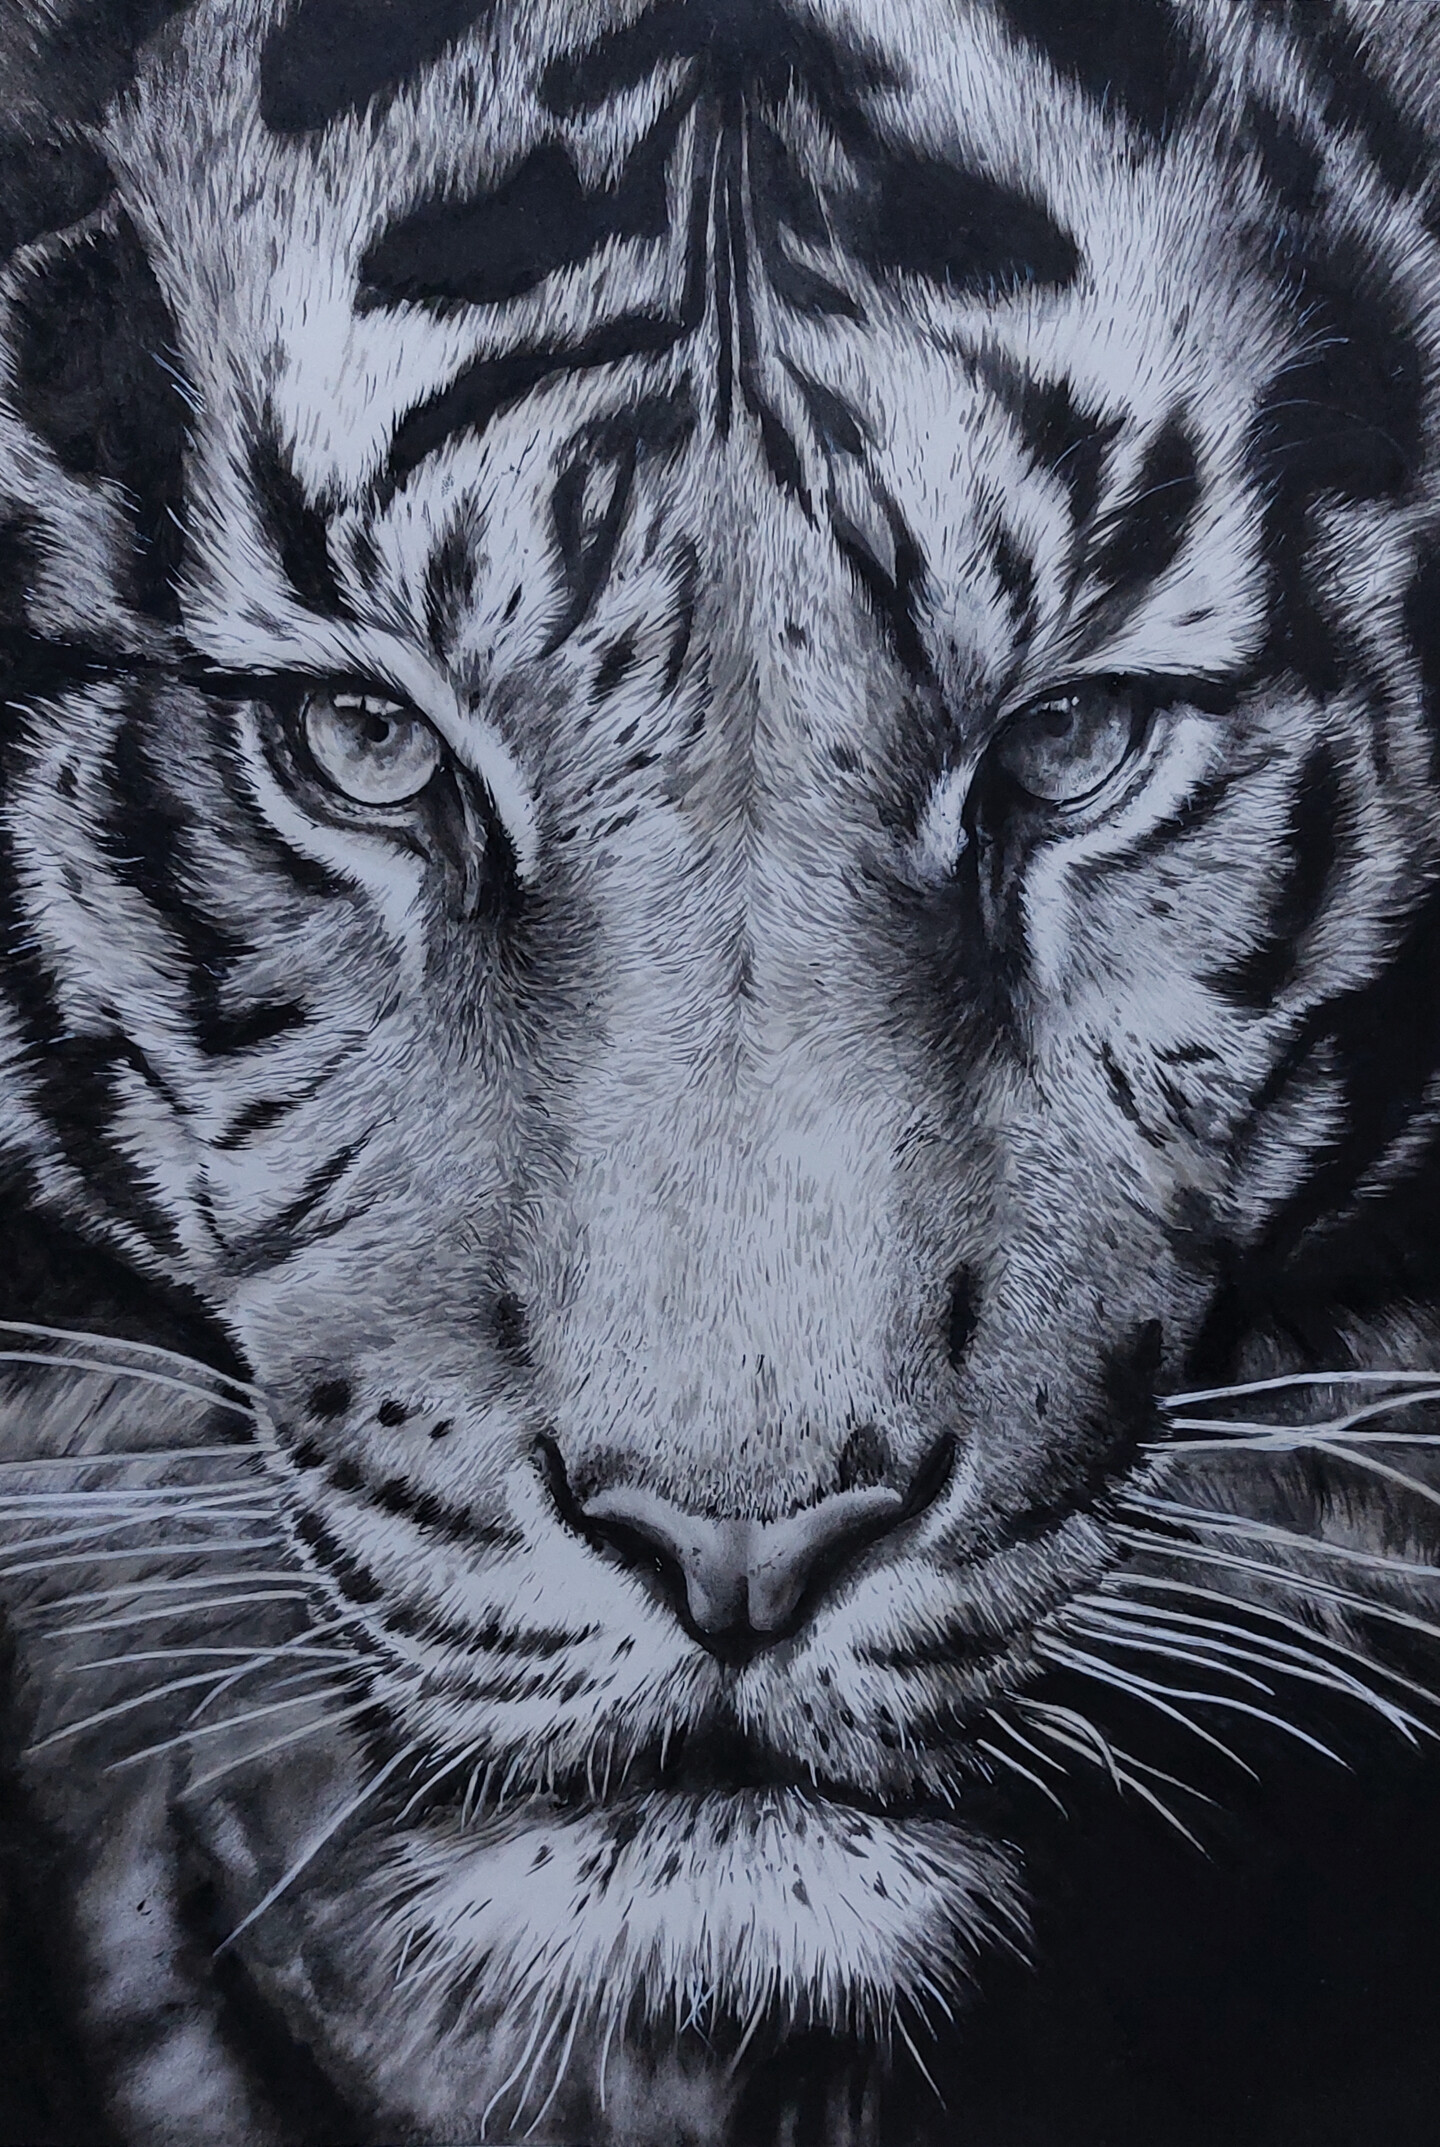 Tiger Pencil Drawing Canvas Print